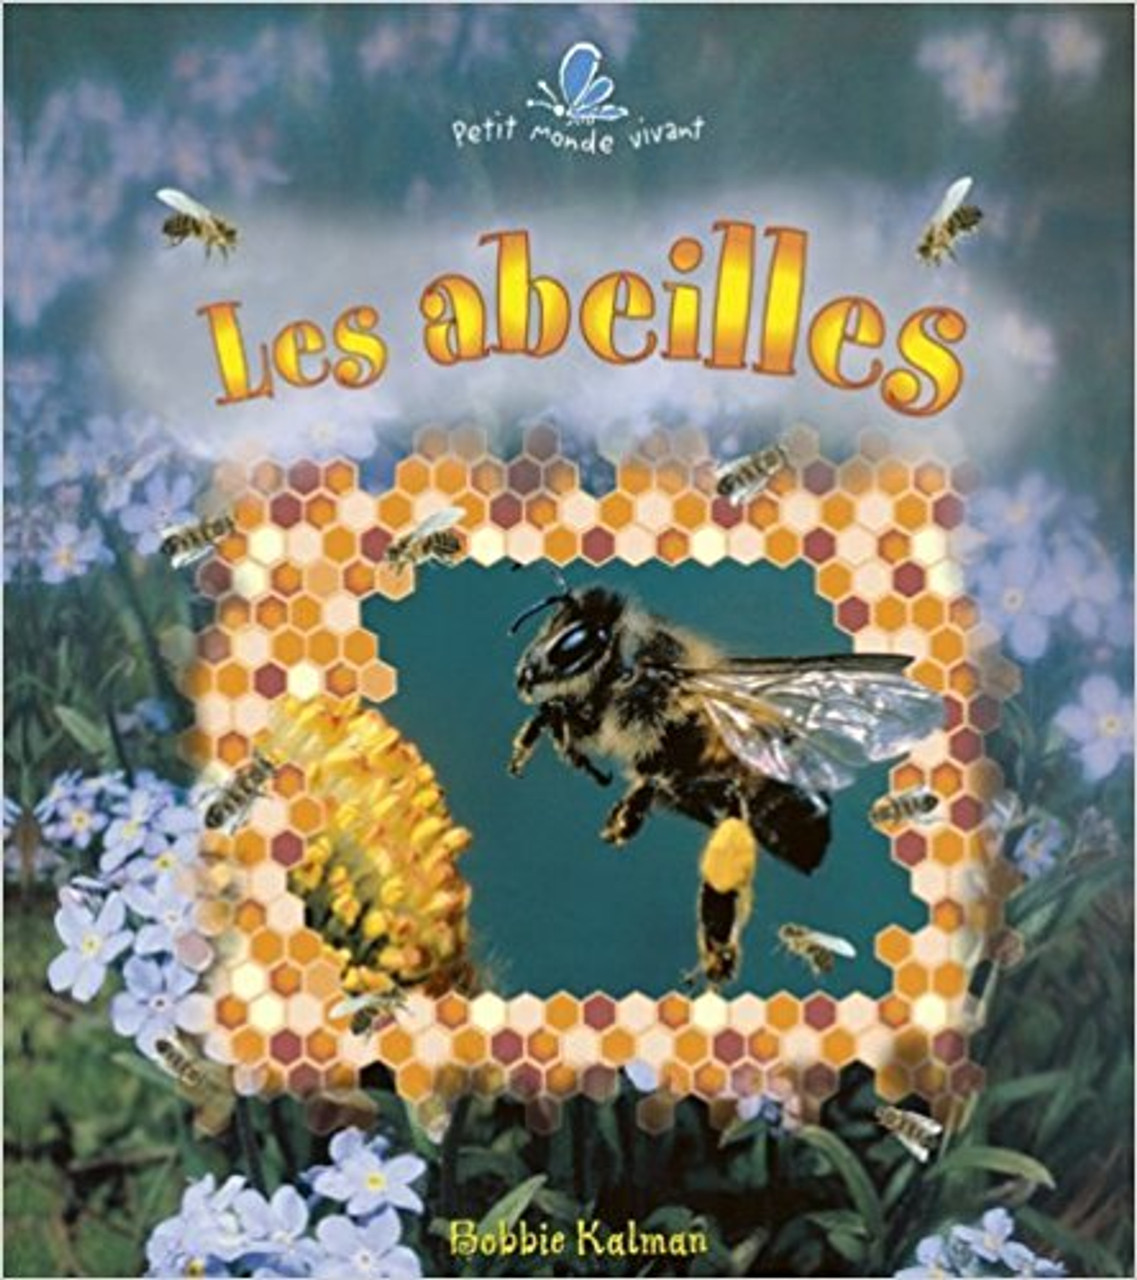 Les Abeilles by Bobbie Kalman